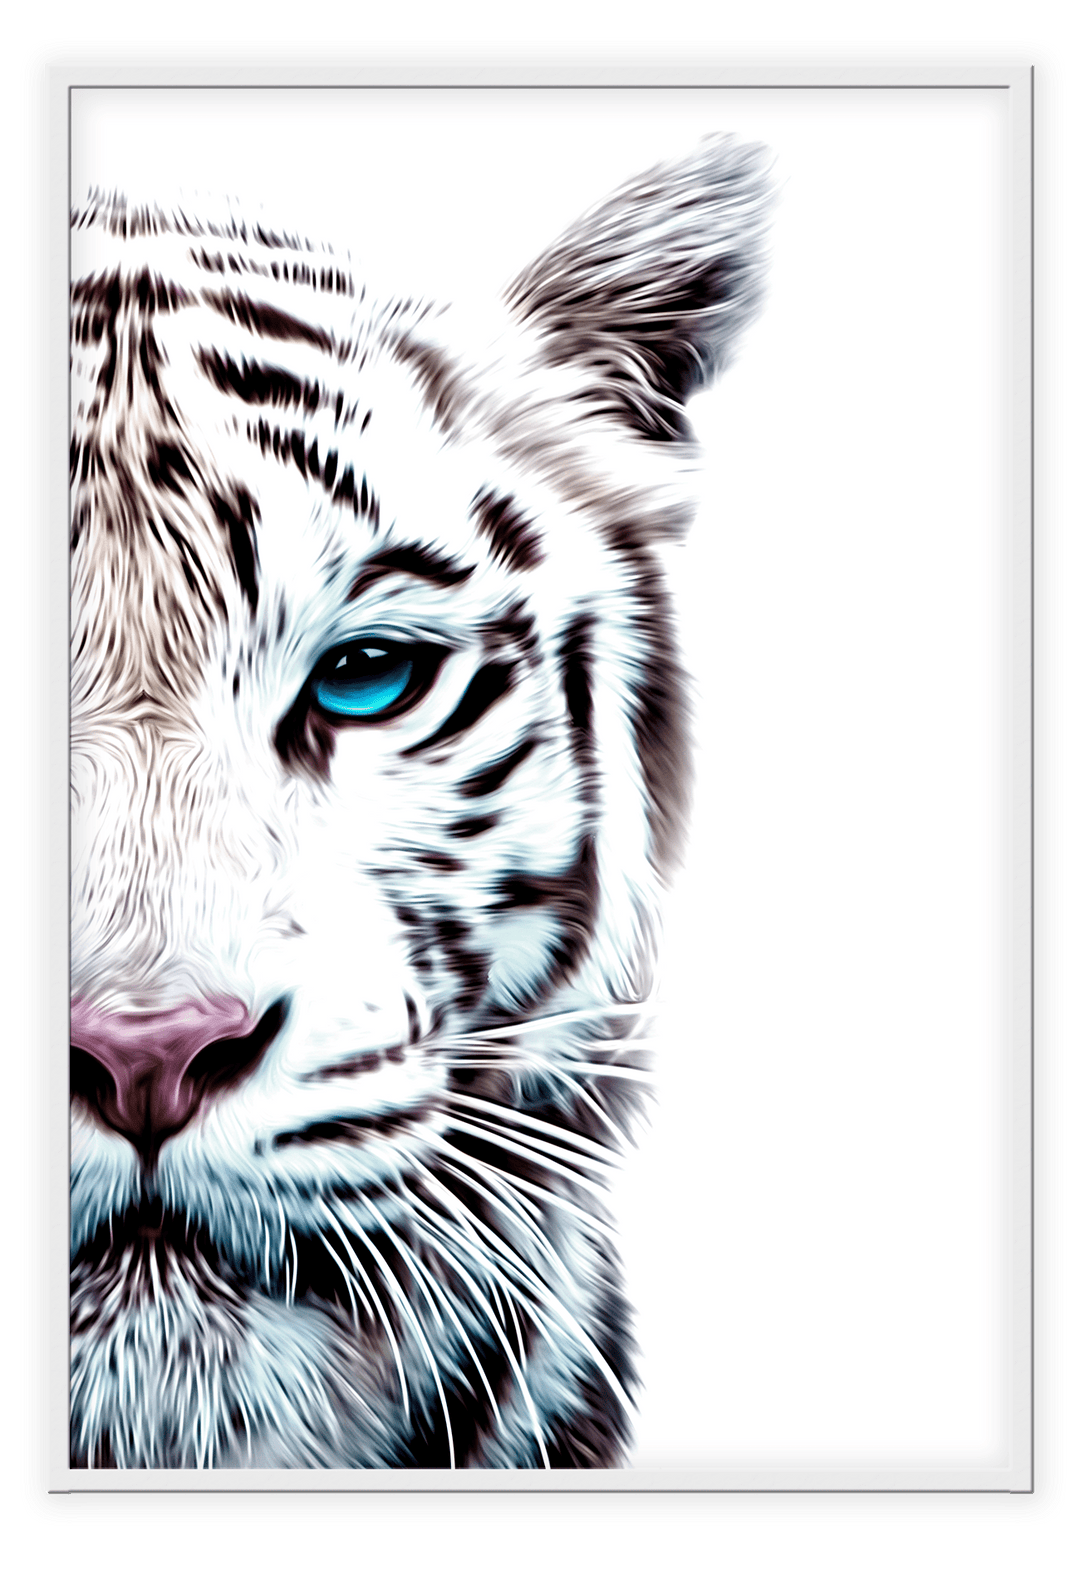 Canvas Print 50x70cm / White Tiger Tiger Wall Art : Ready to hang framed artwork. Brand